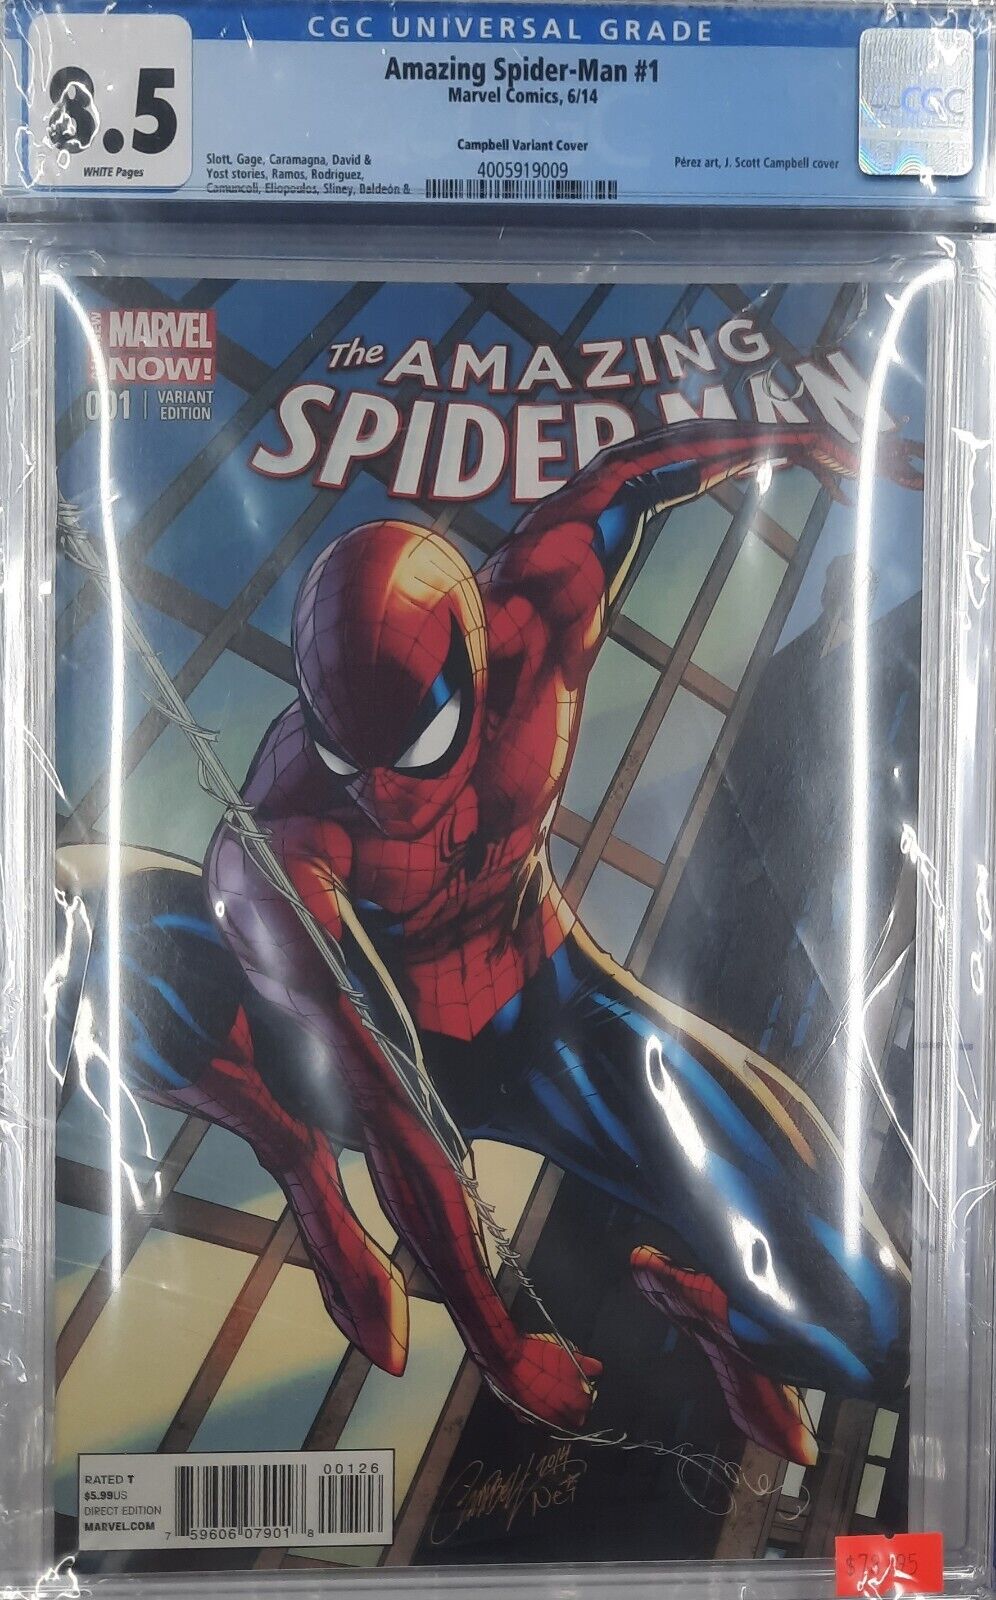 CGC 8.5 Amazing Spider-Man #1 Marvel Comics, 6/14 Campbell Variant Cover